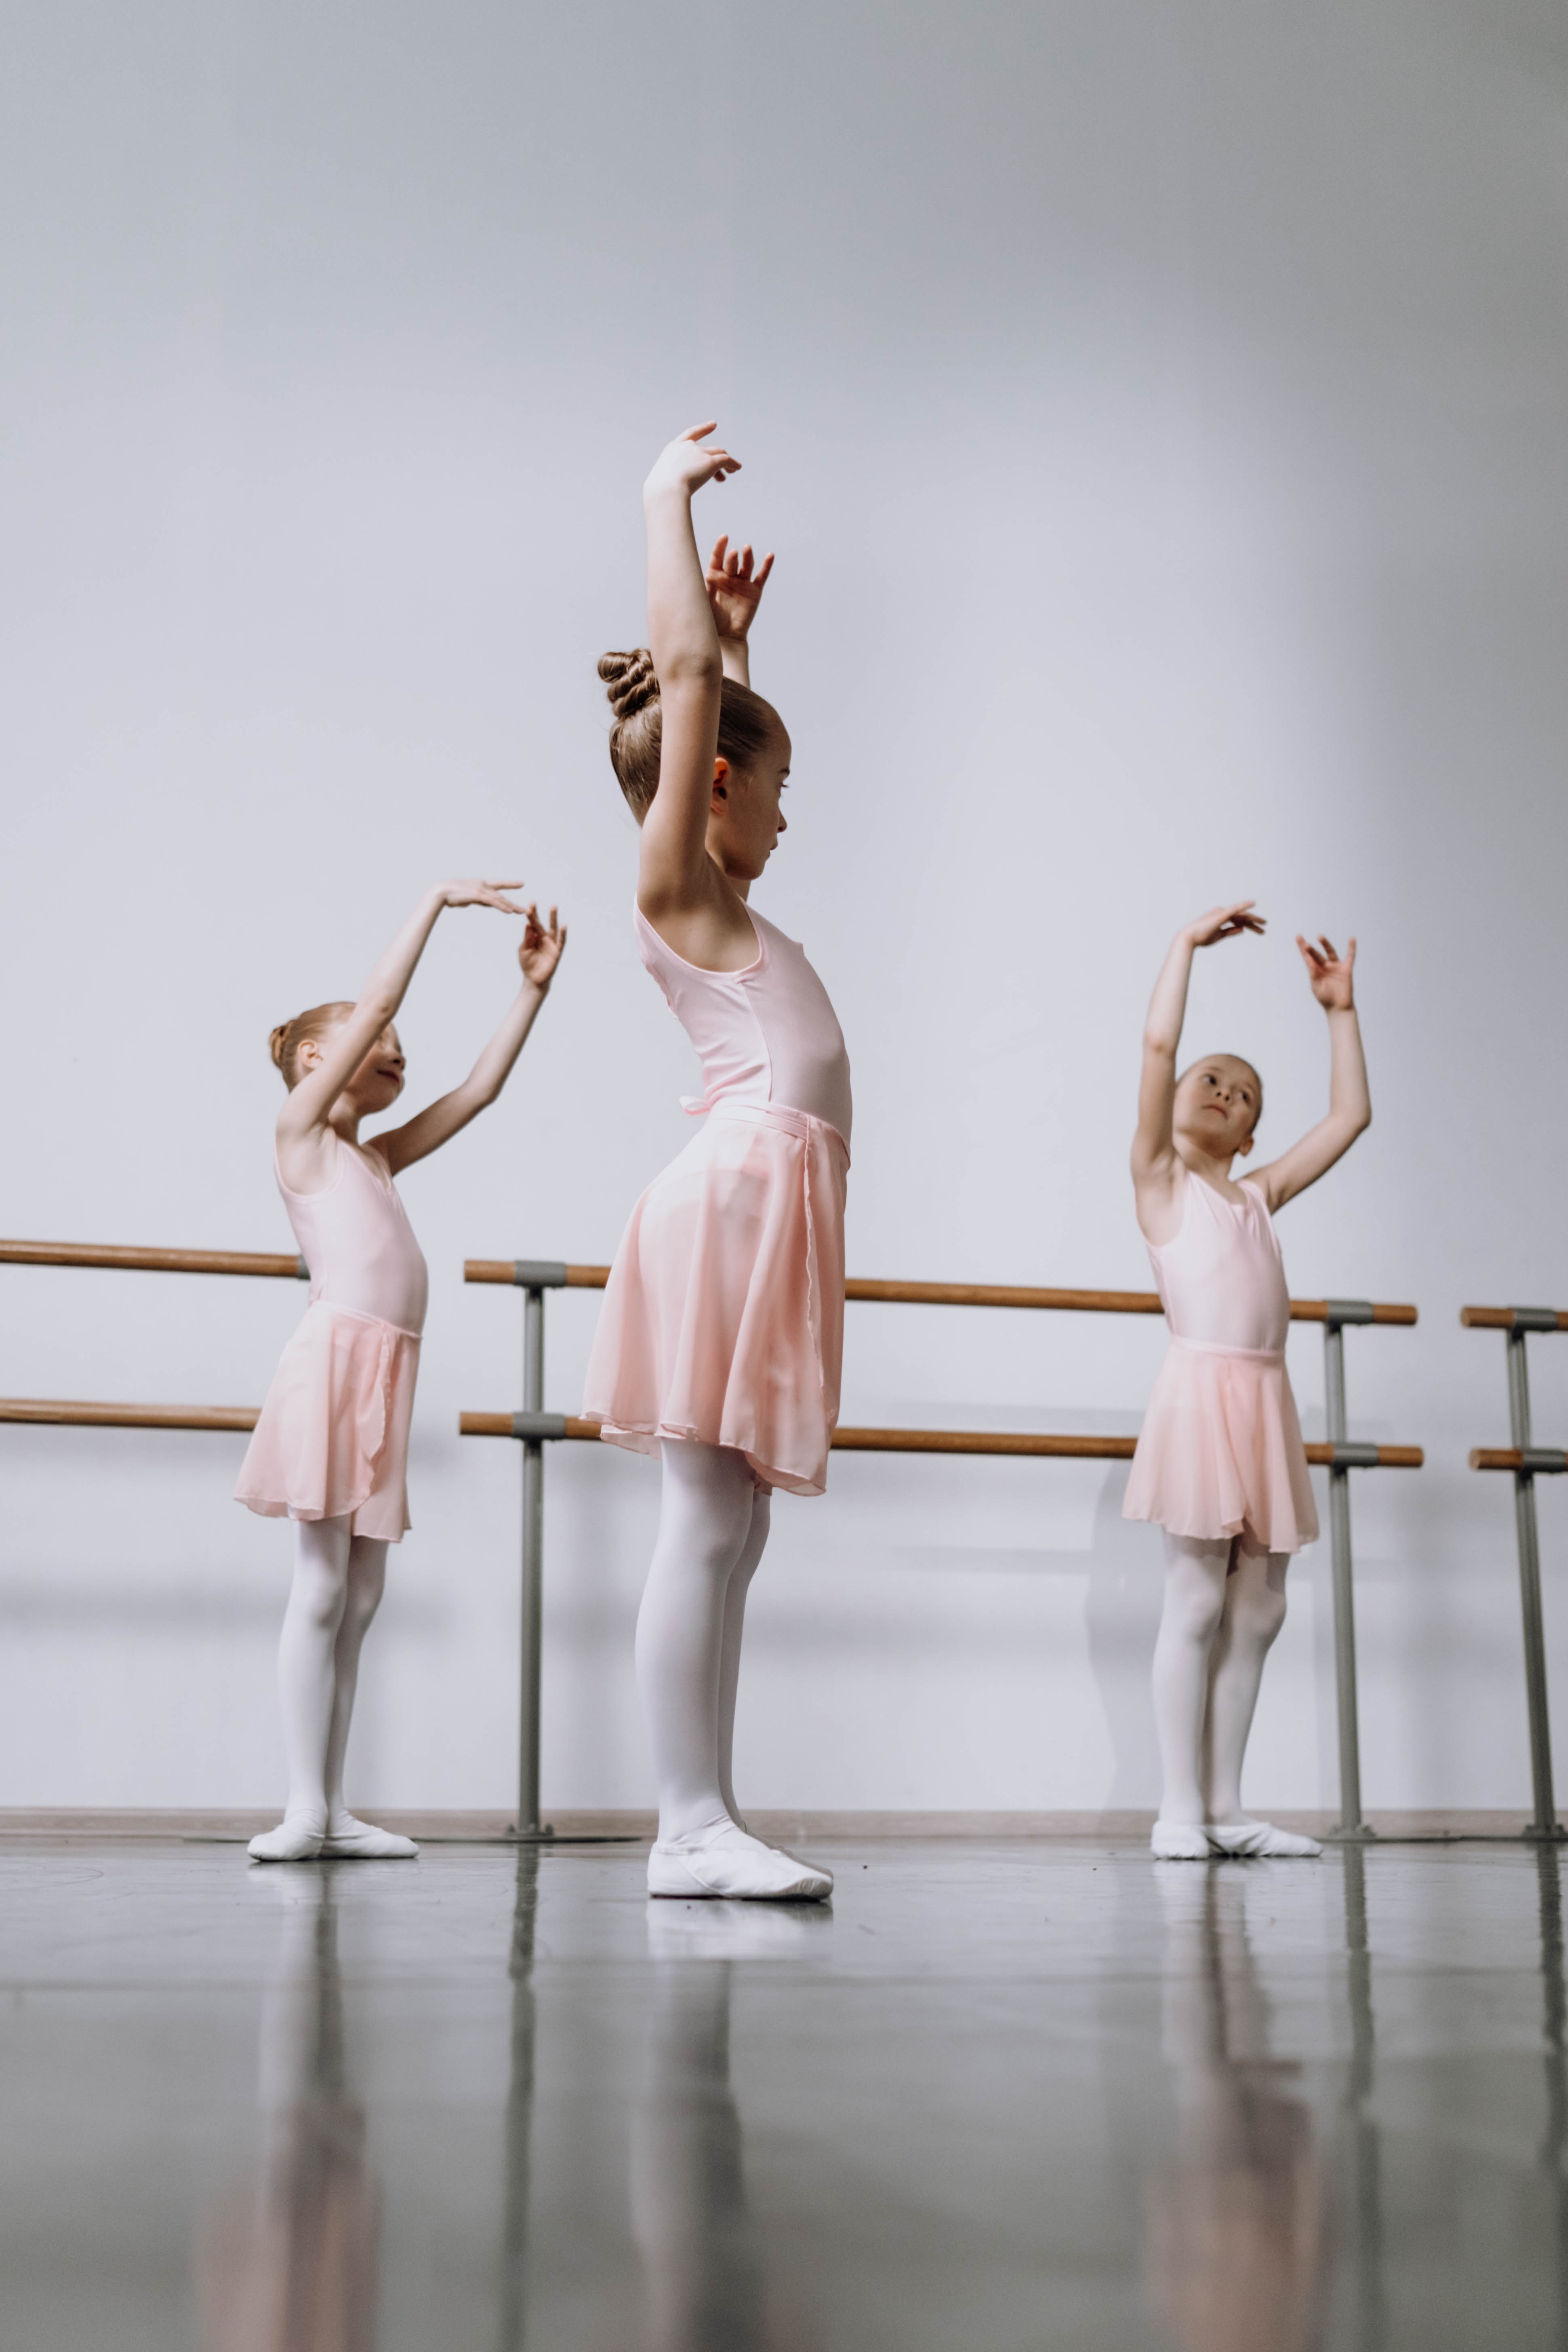 Best Ballet Dancers Photo · 100% Free Downloads